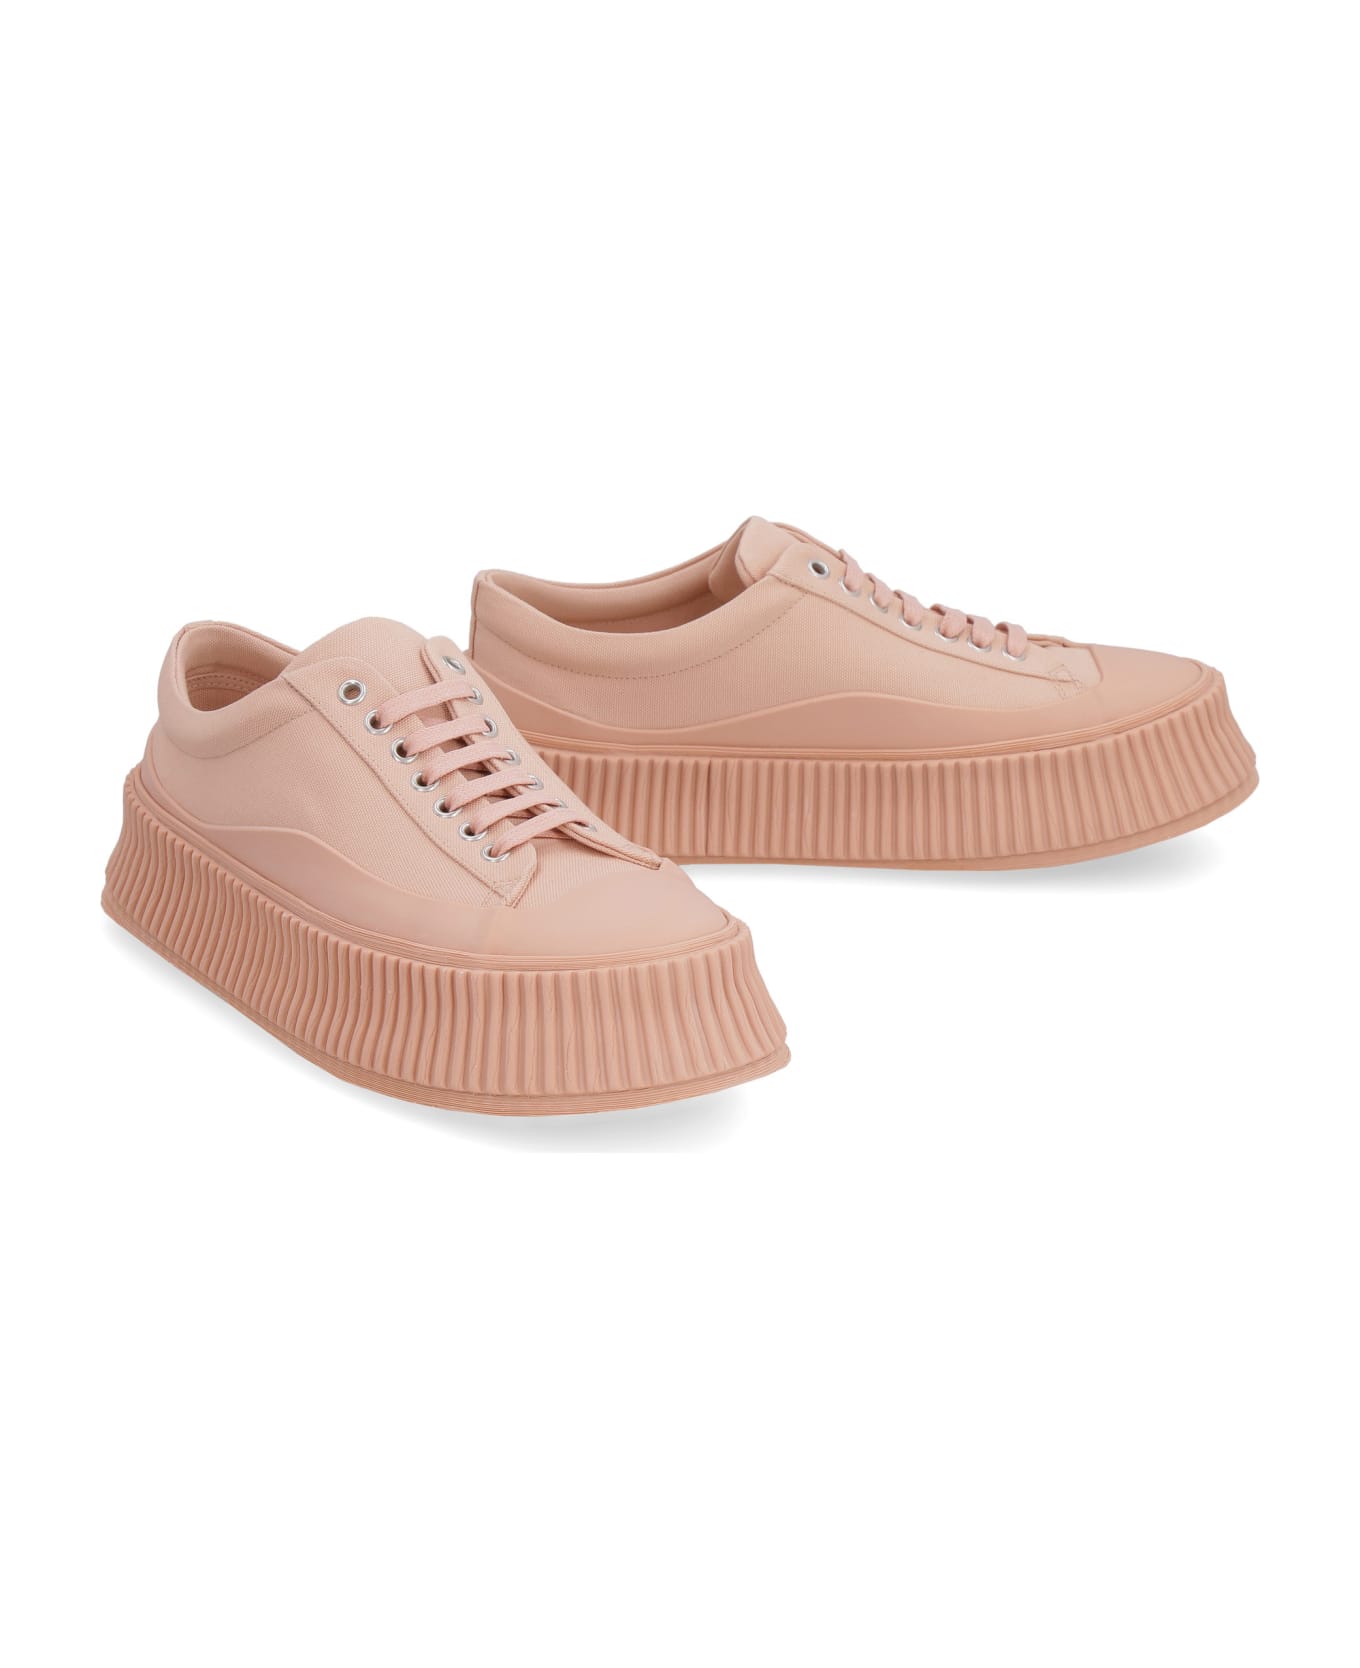 Jil Sander Canvas Chunky Sneakers - Salmon pink ウェッジシューズ